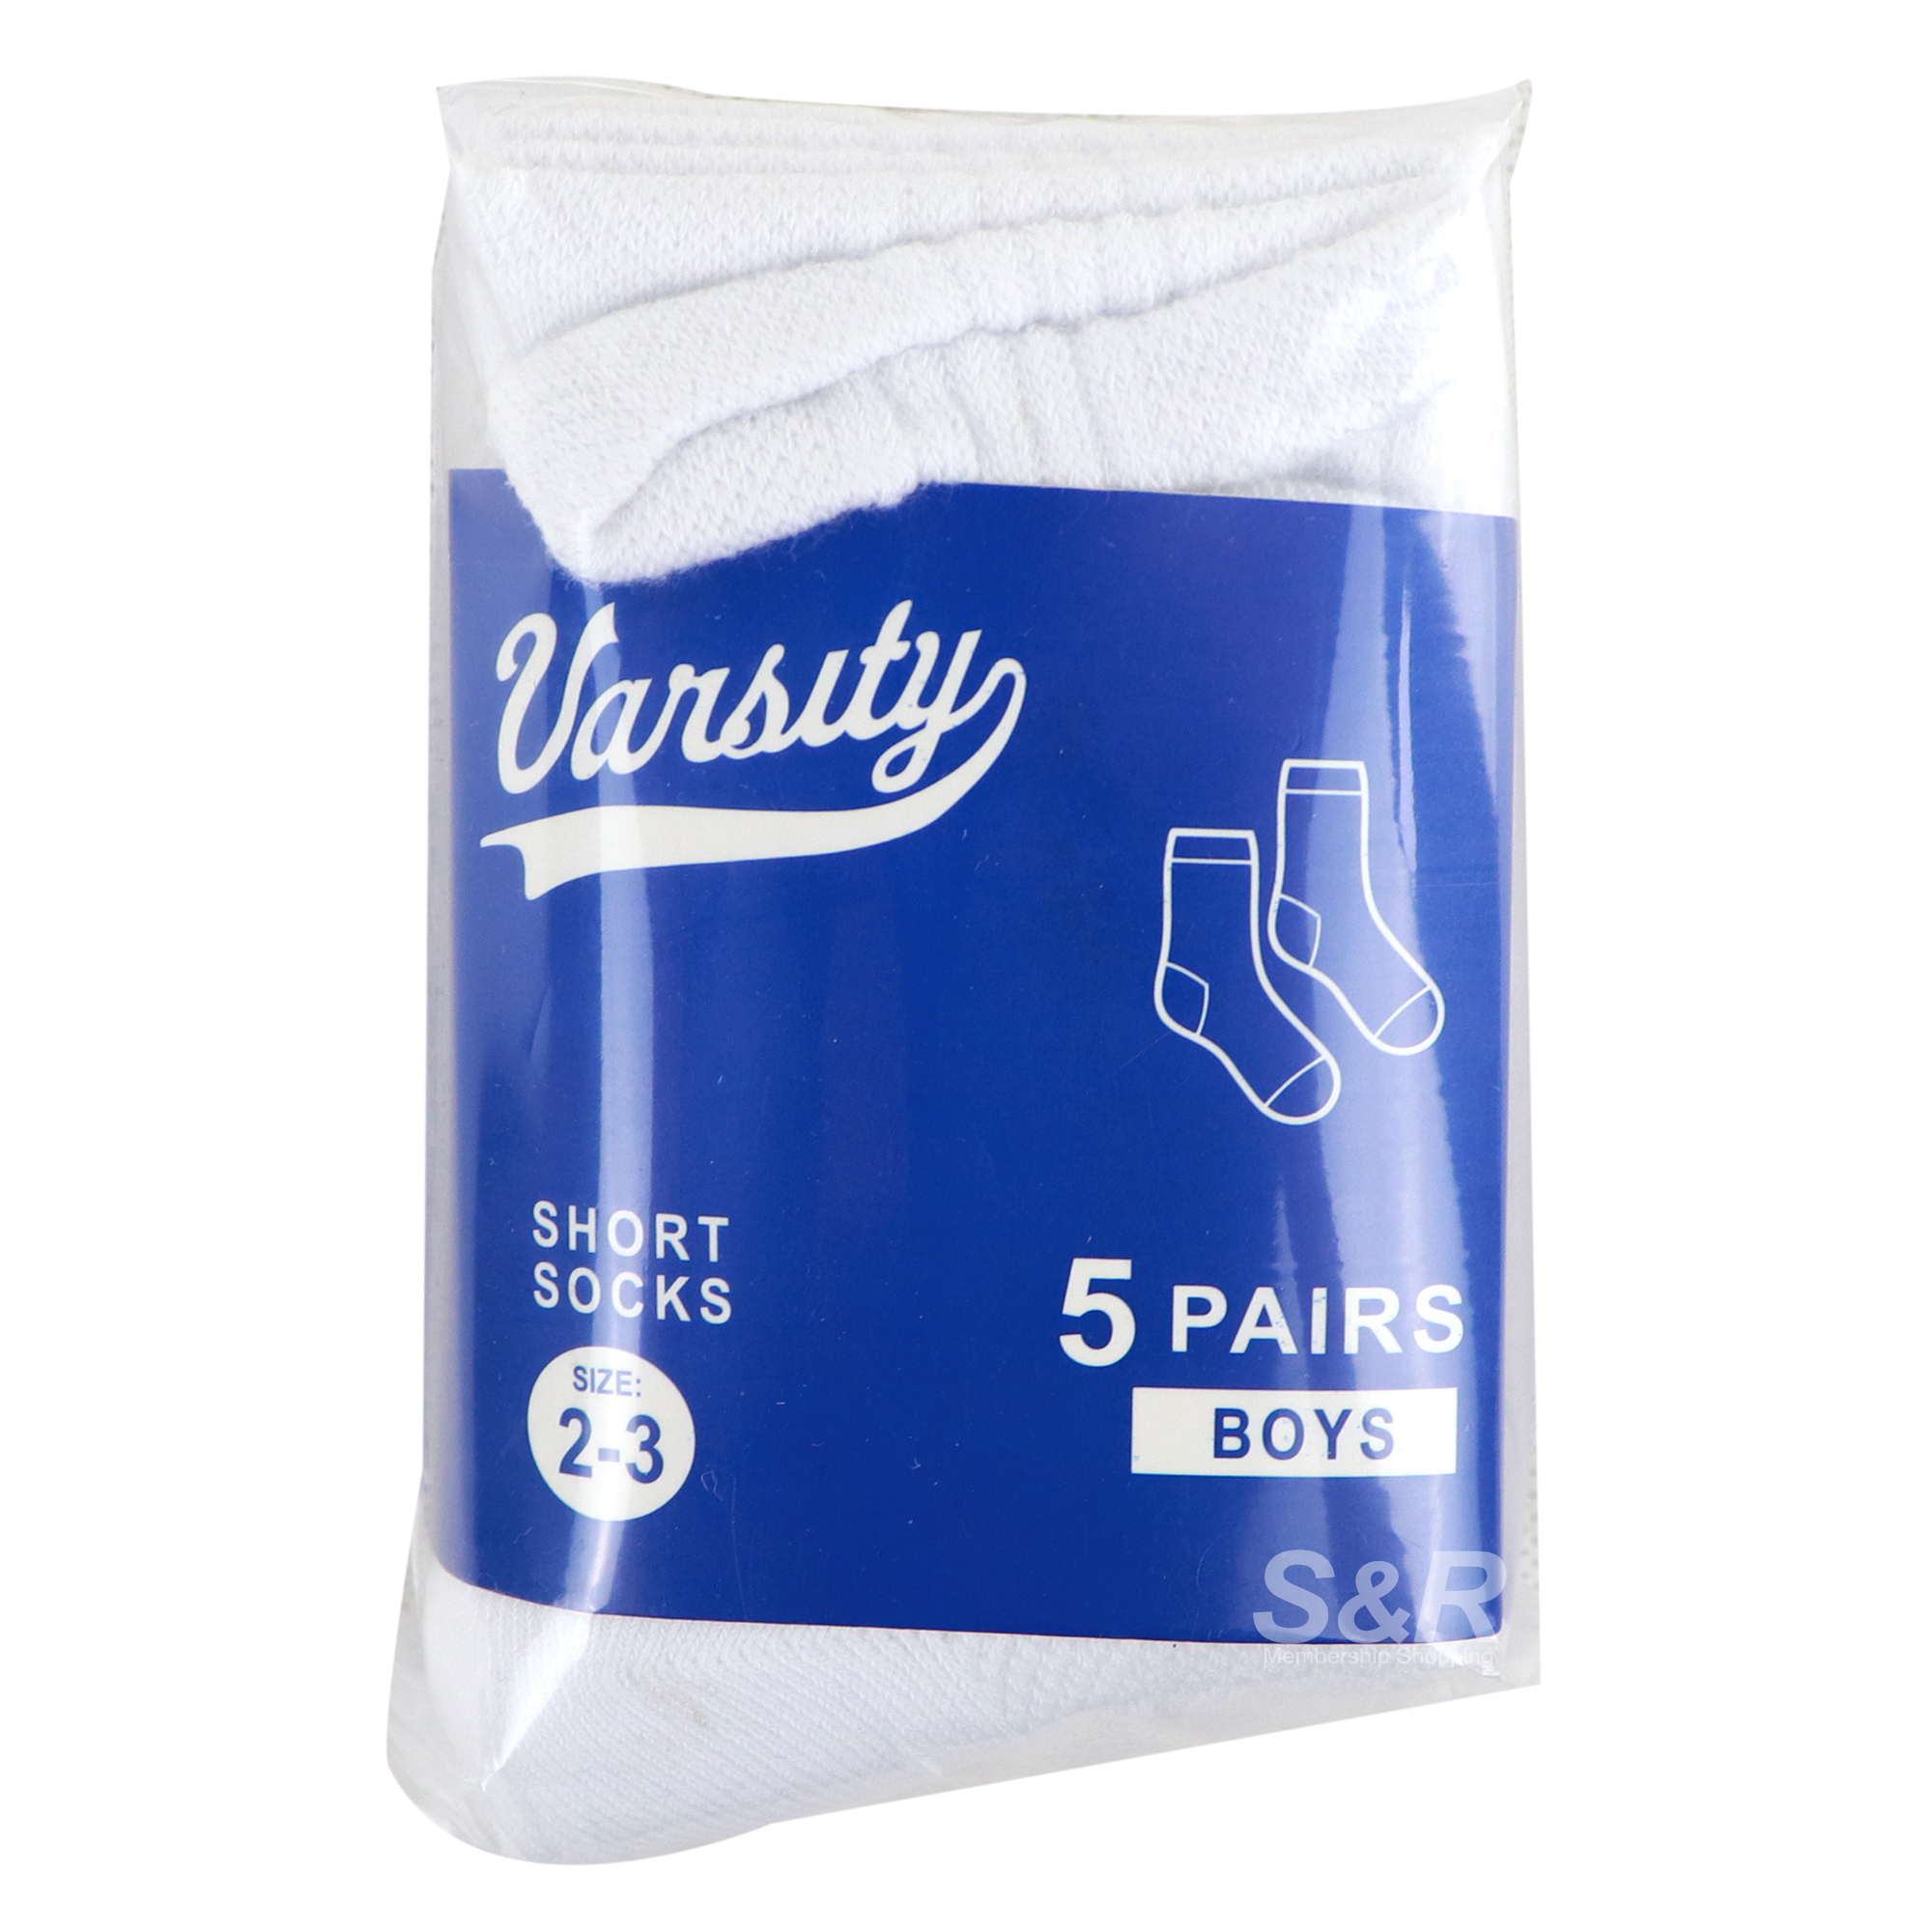 Varsity Boys Short Socks Size 2-3 5 pairs